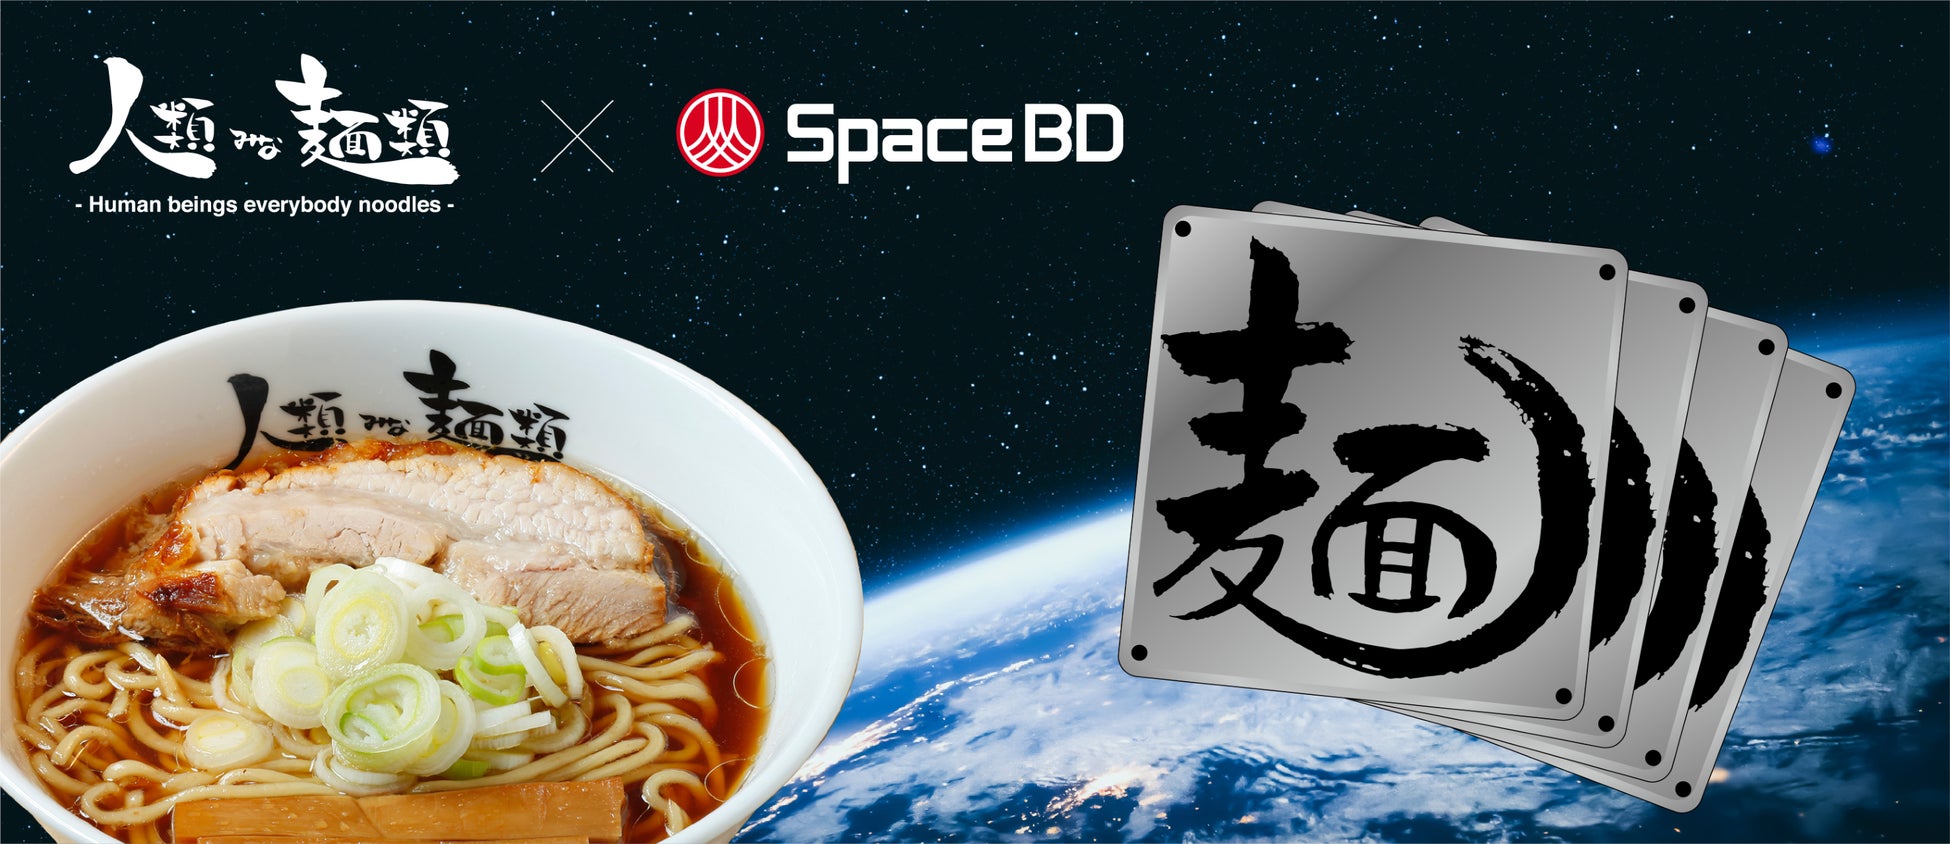 Space BD 大阪行列No.1ラーメン店「人類みな麺類」のラーメンとロゴ等を2023年度内に宇宙空間に打上げ